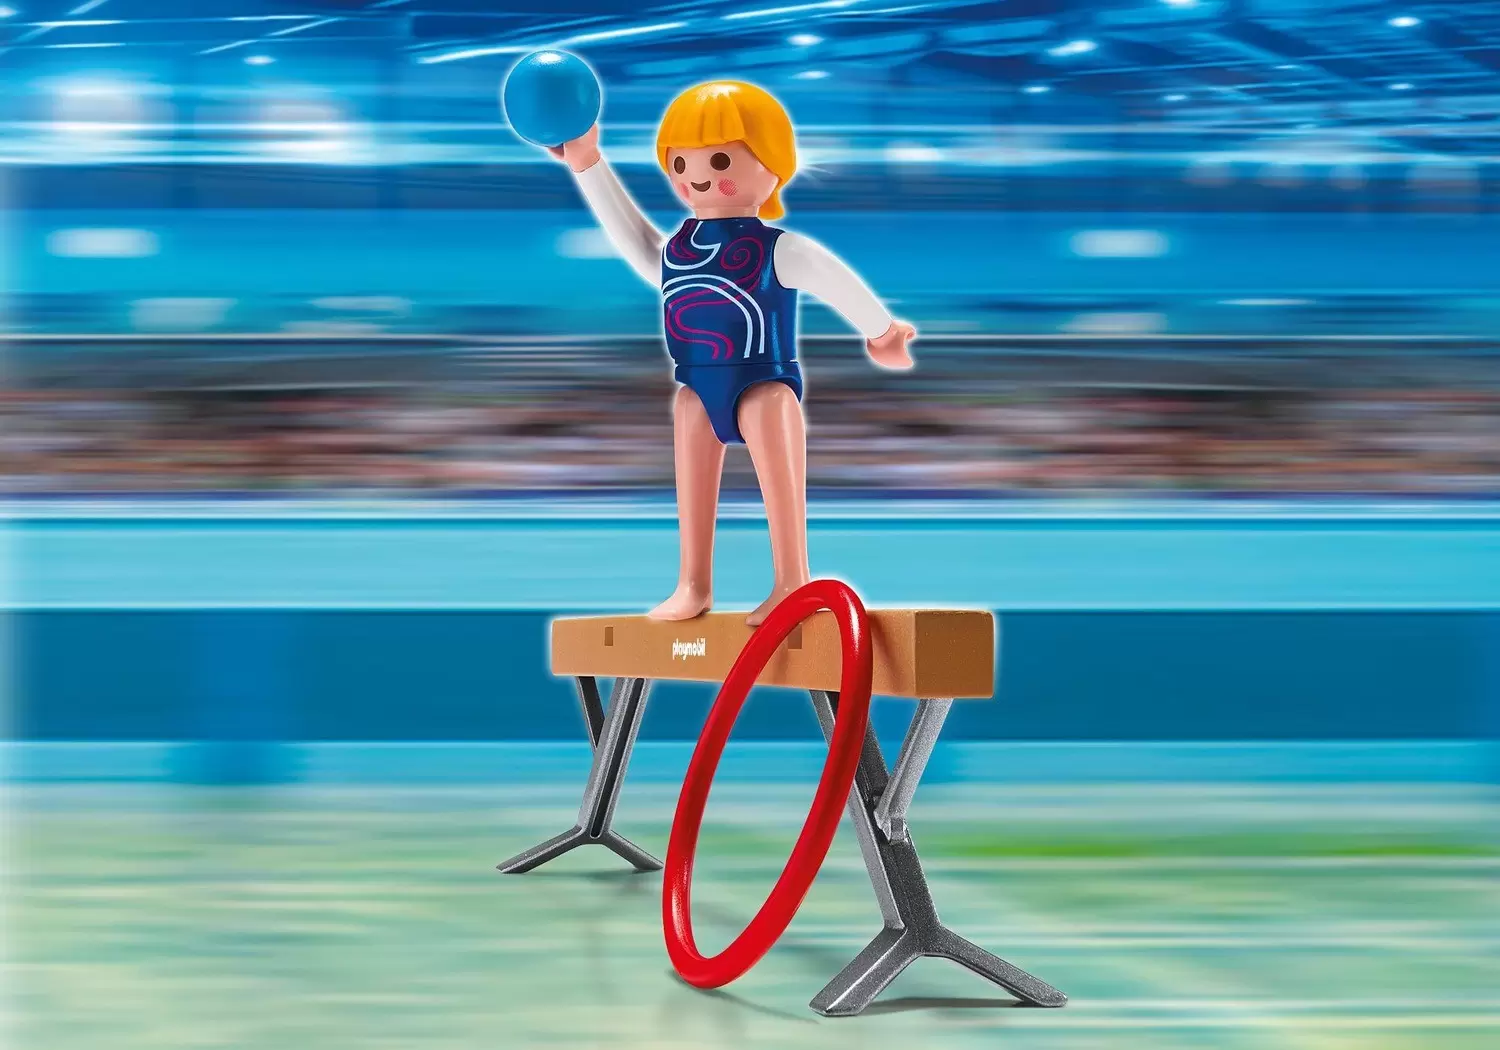 Playmobil Sports - Gymnast on Balance Beam